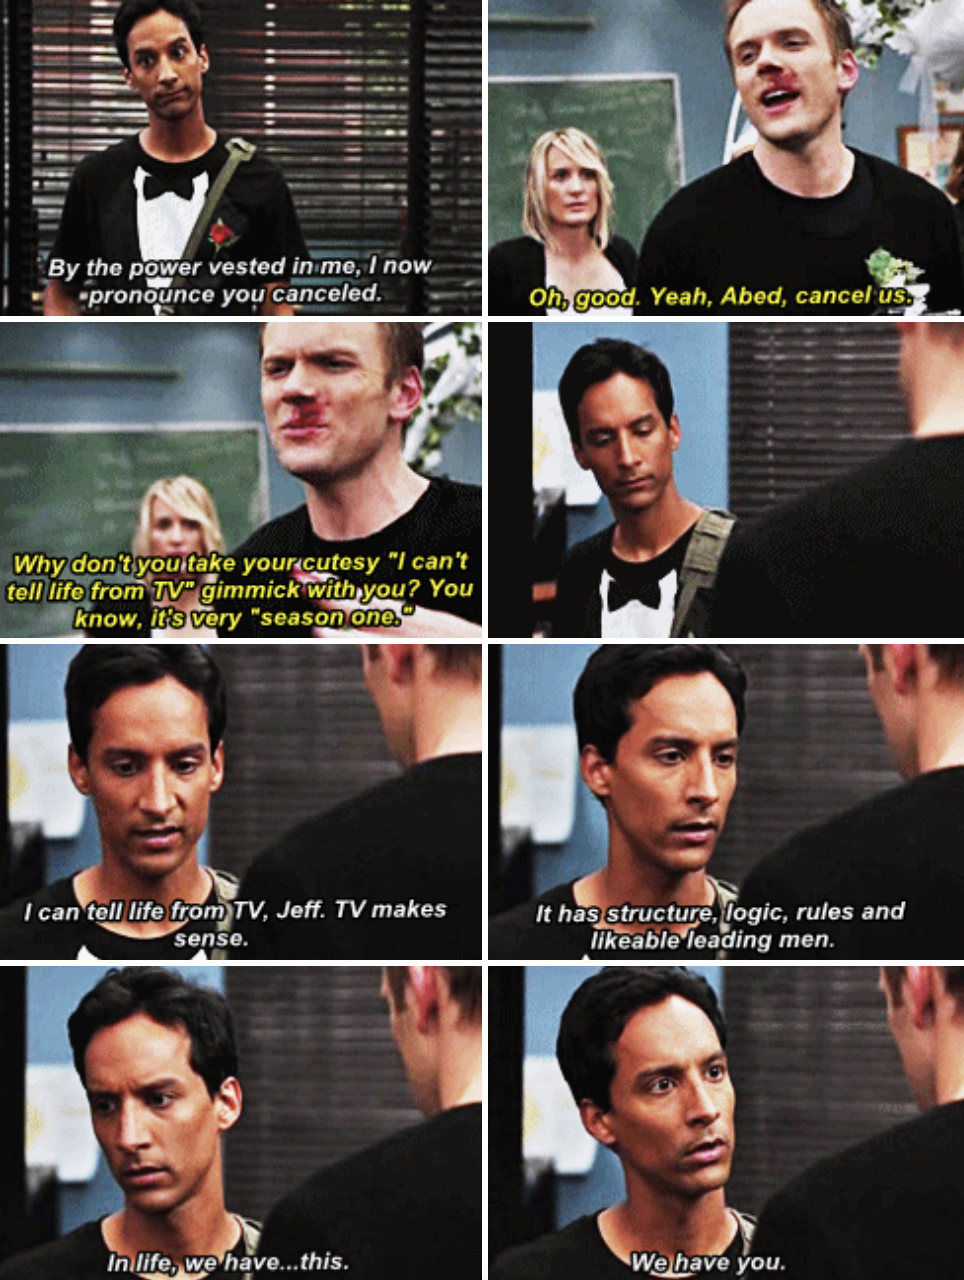 Abed telling Jeff TV makes more sense than real life